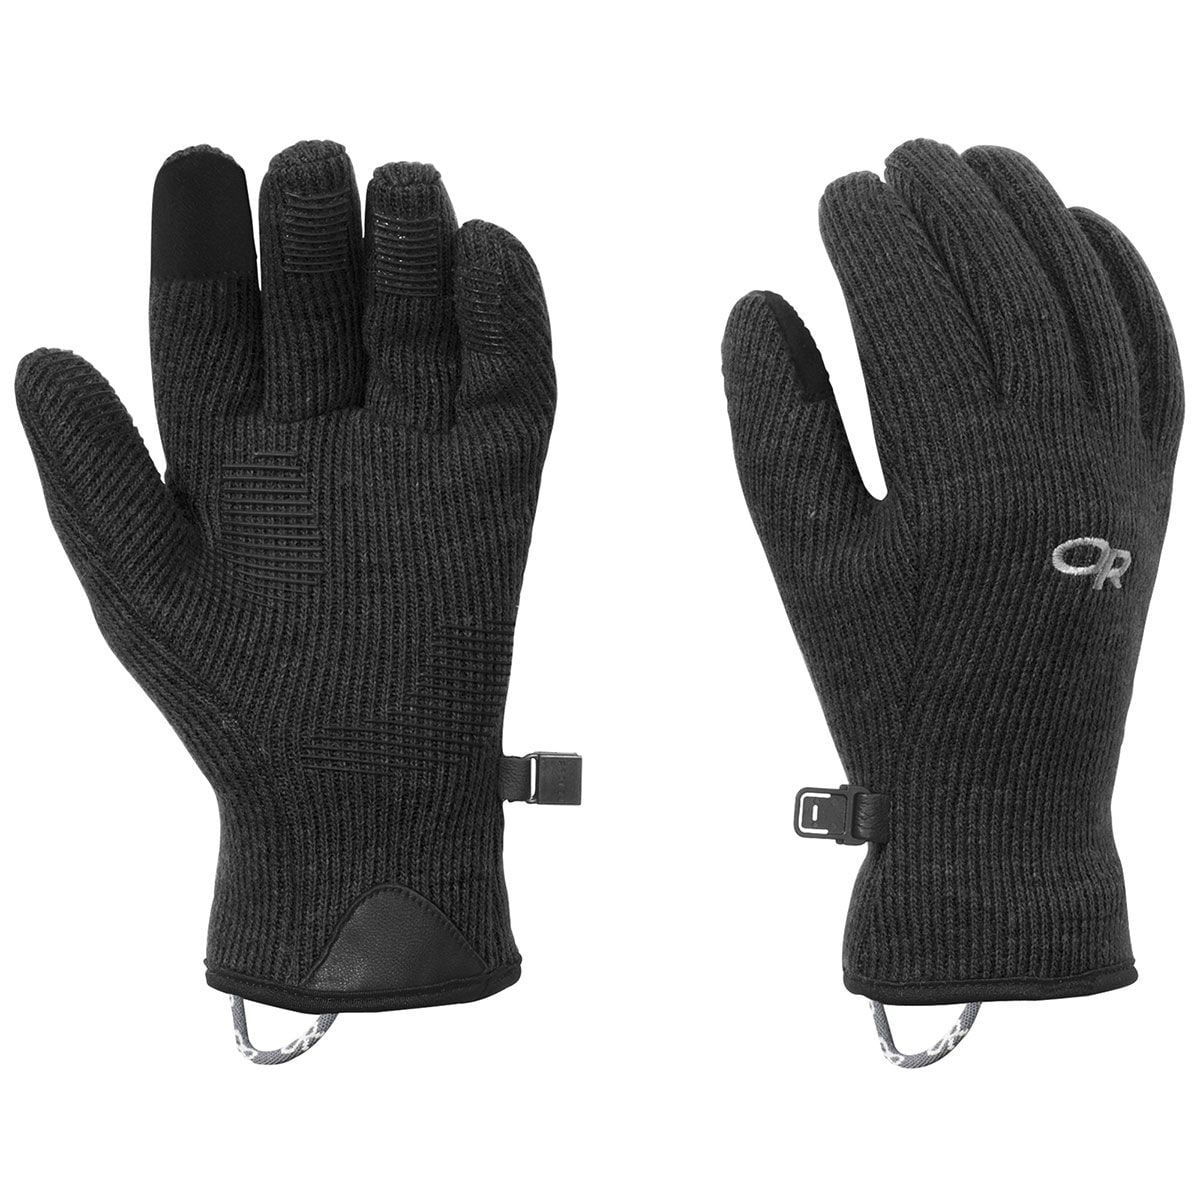 Outdoor Research - Women's Flurry Sensor Glove